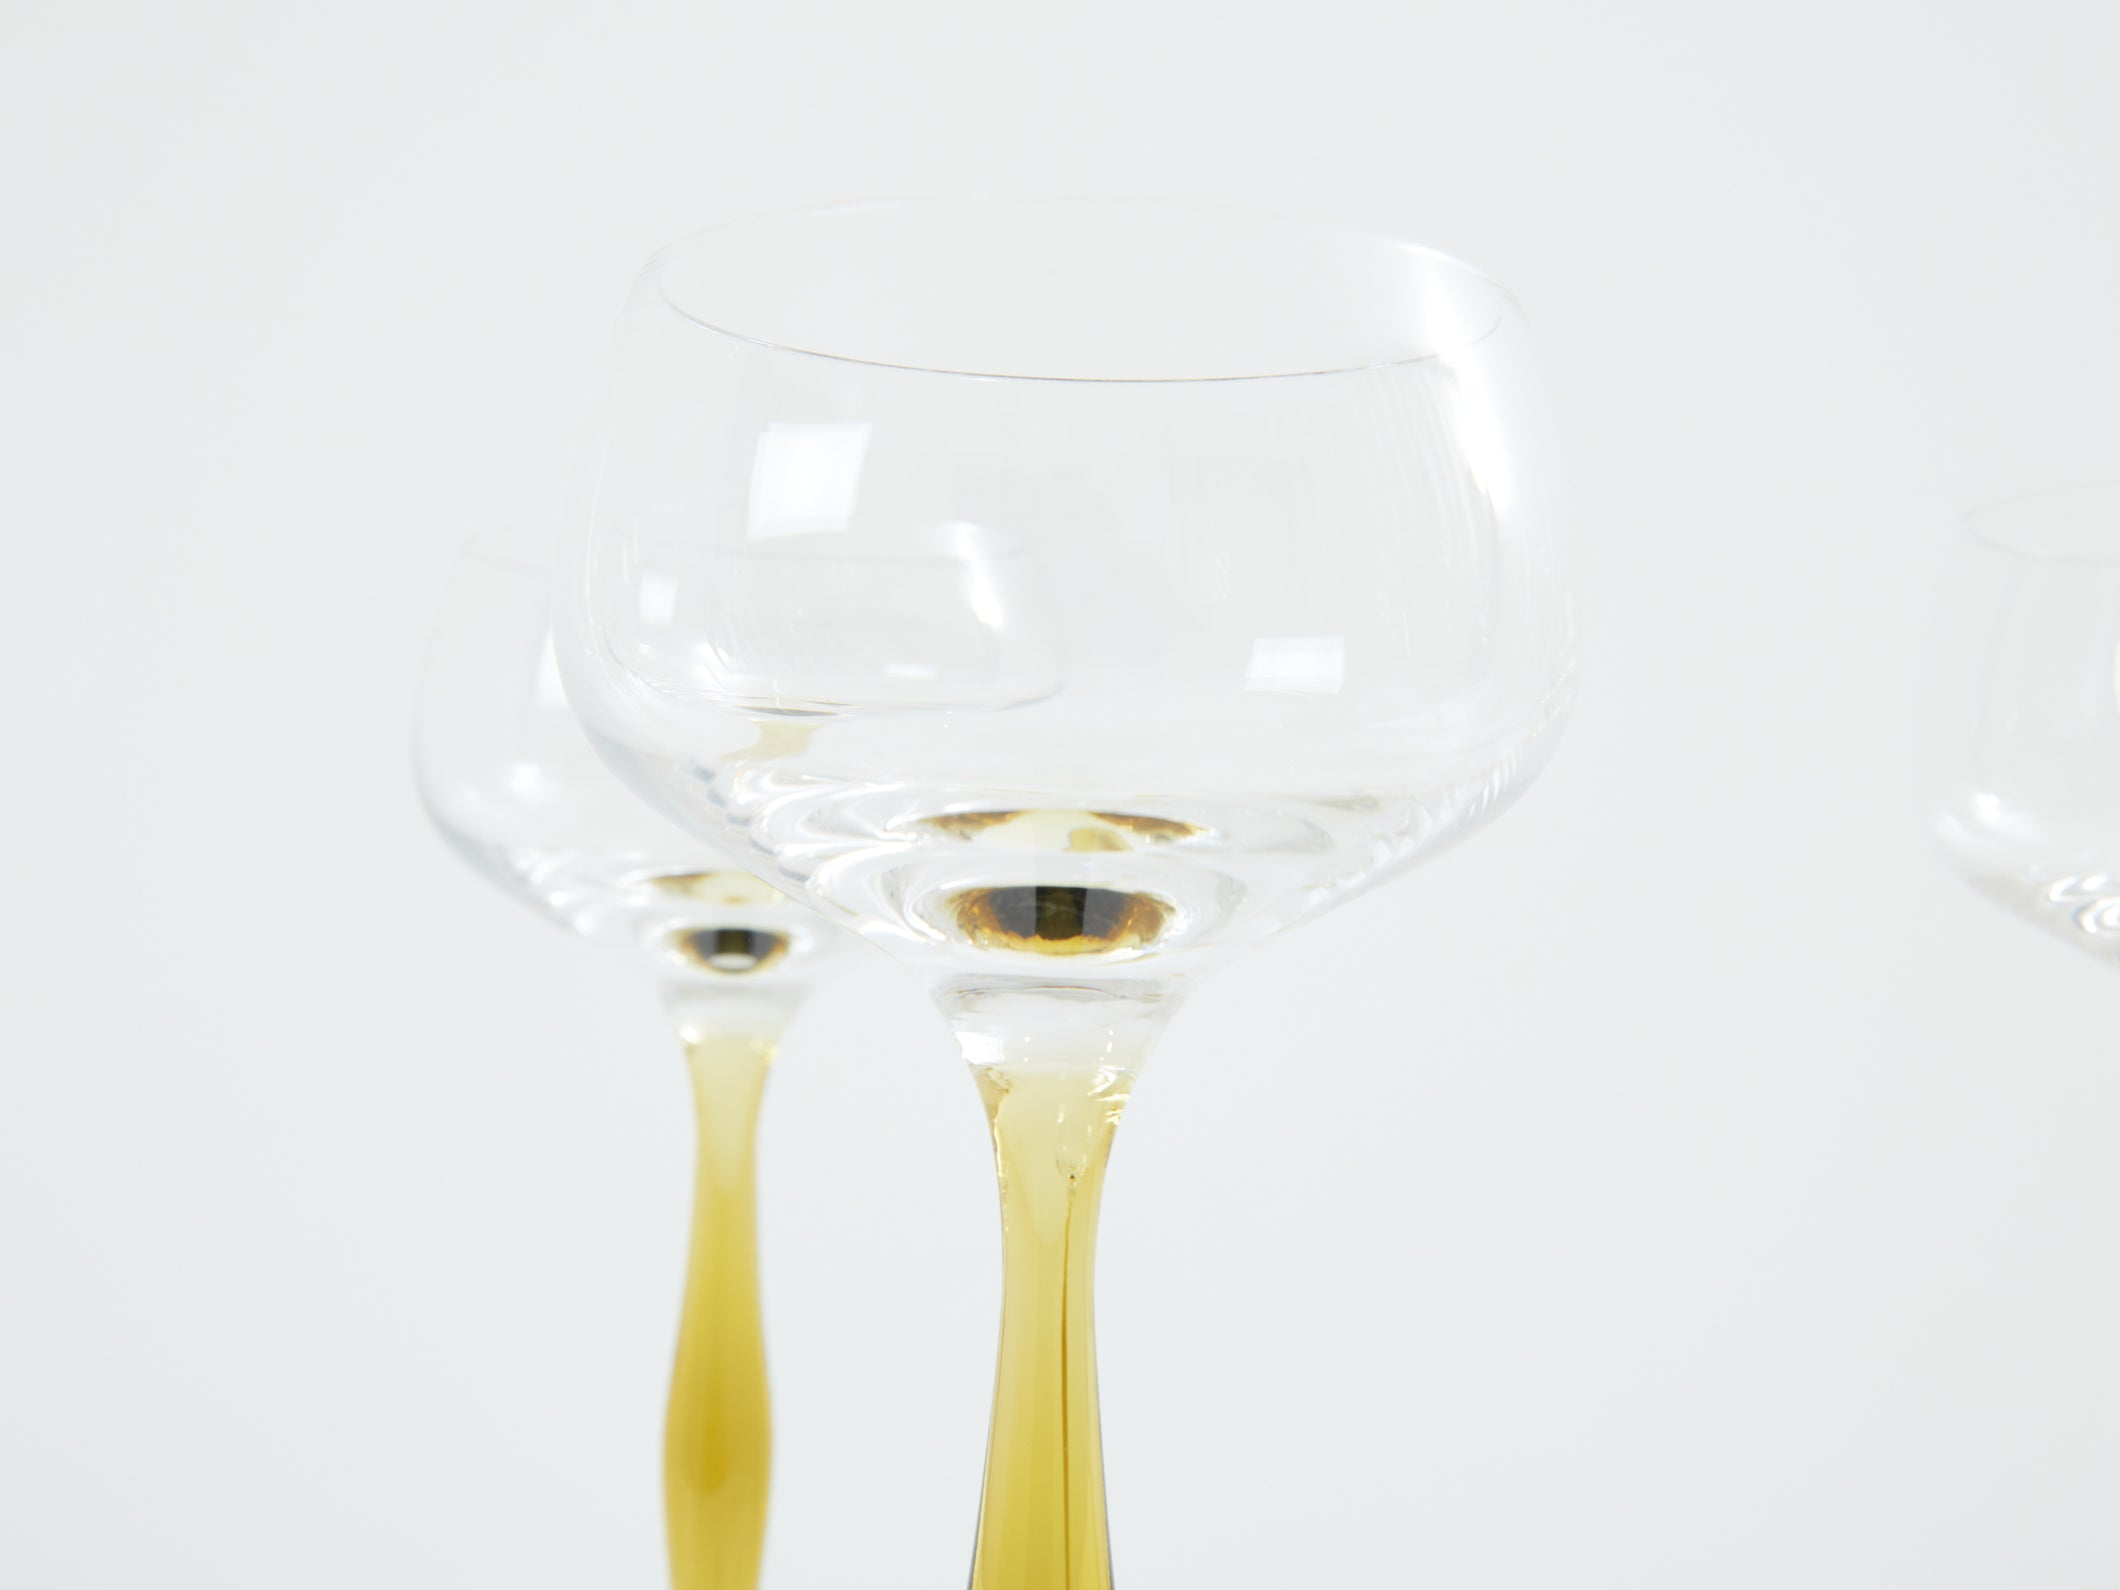 Peter Behrens set of six Art Nouveau champagne glasses 1898